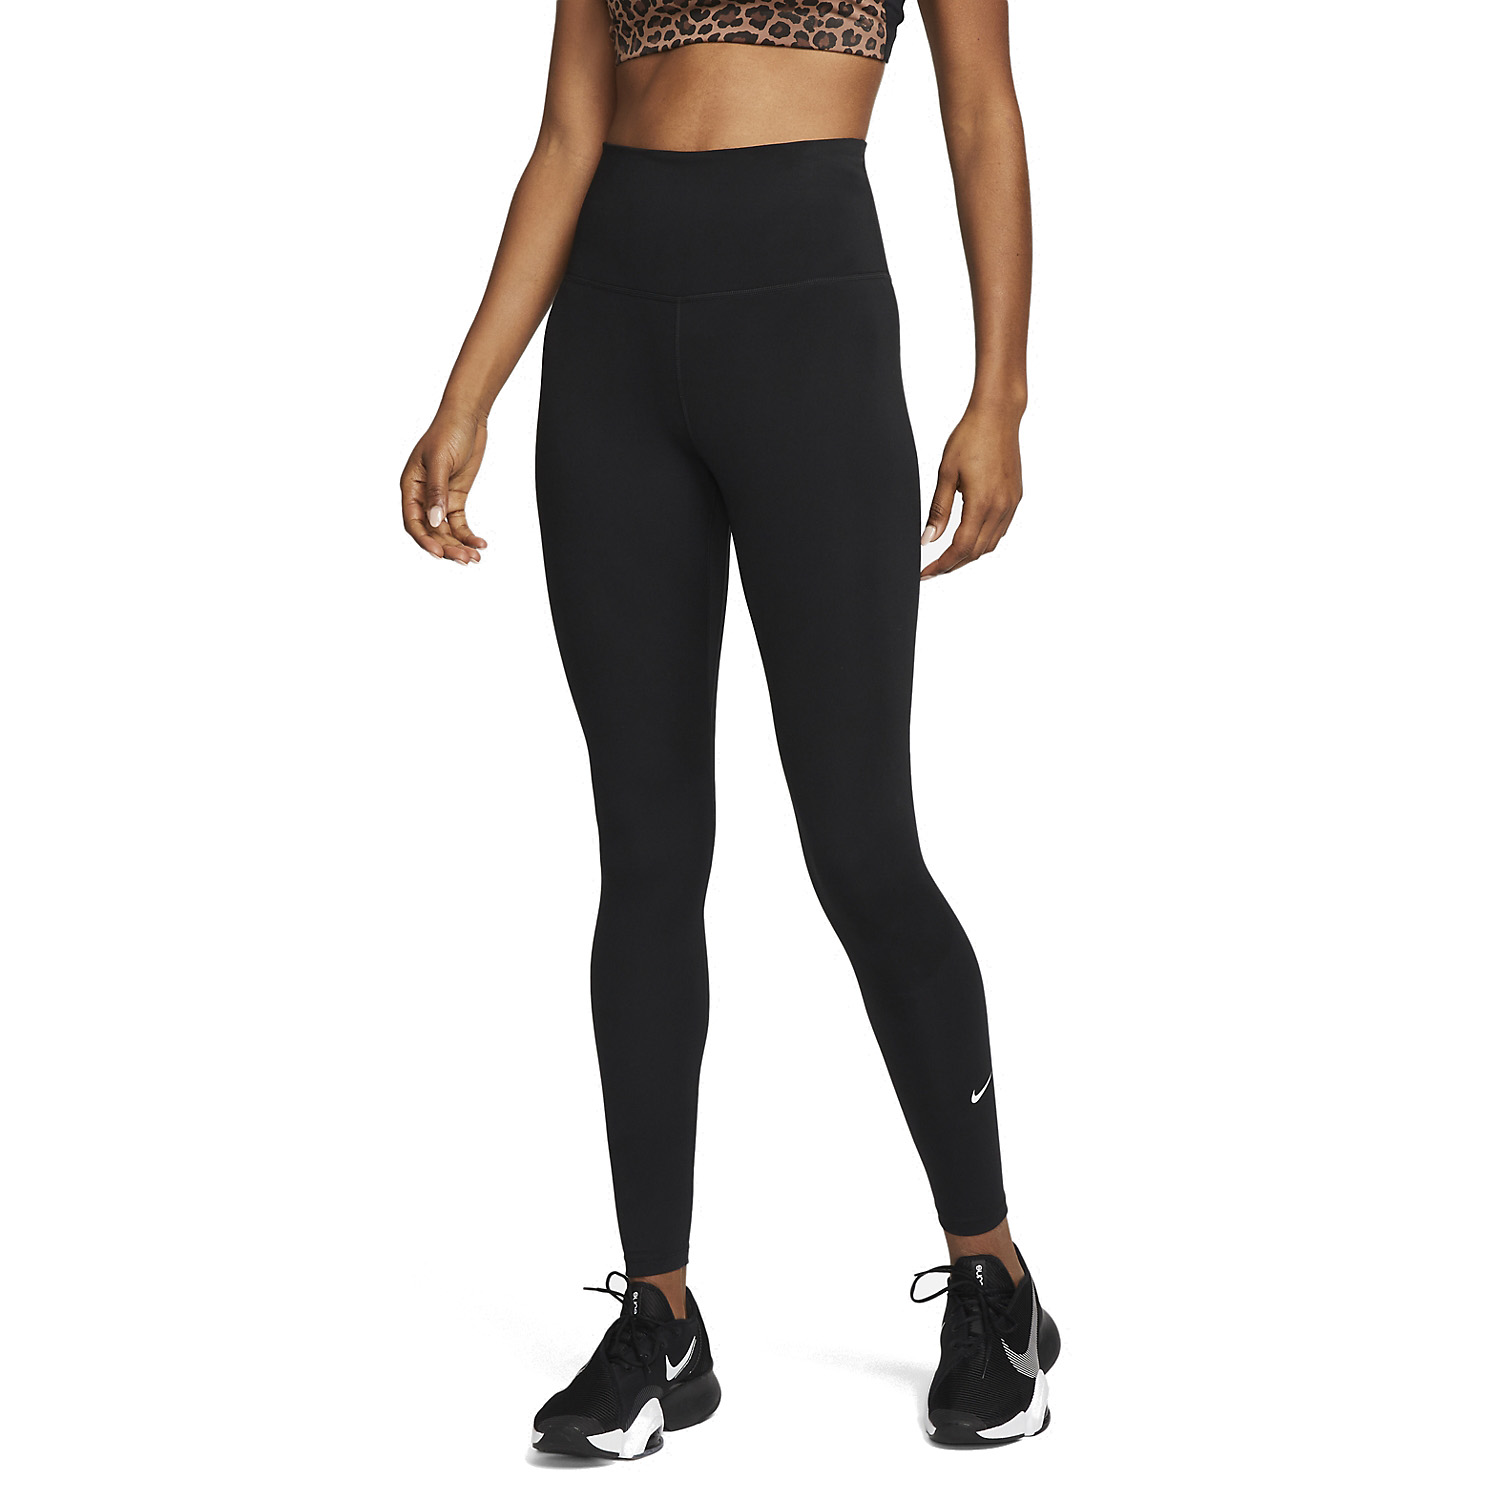 selvmord kor sejr Nike Dri-FIT One Women's Training Tights - Black/White